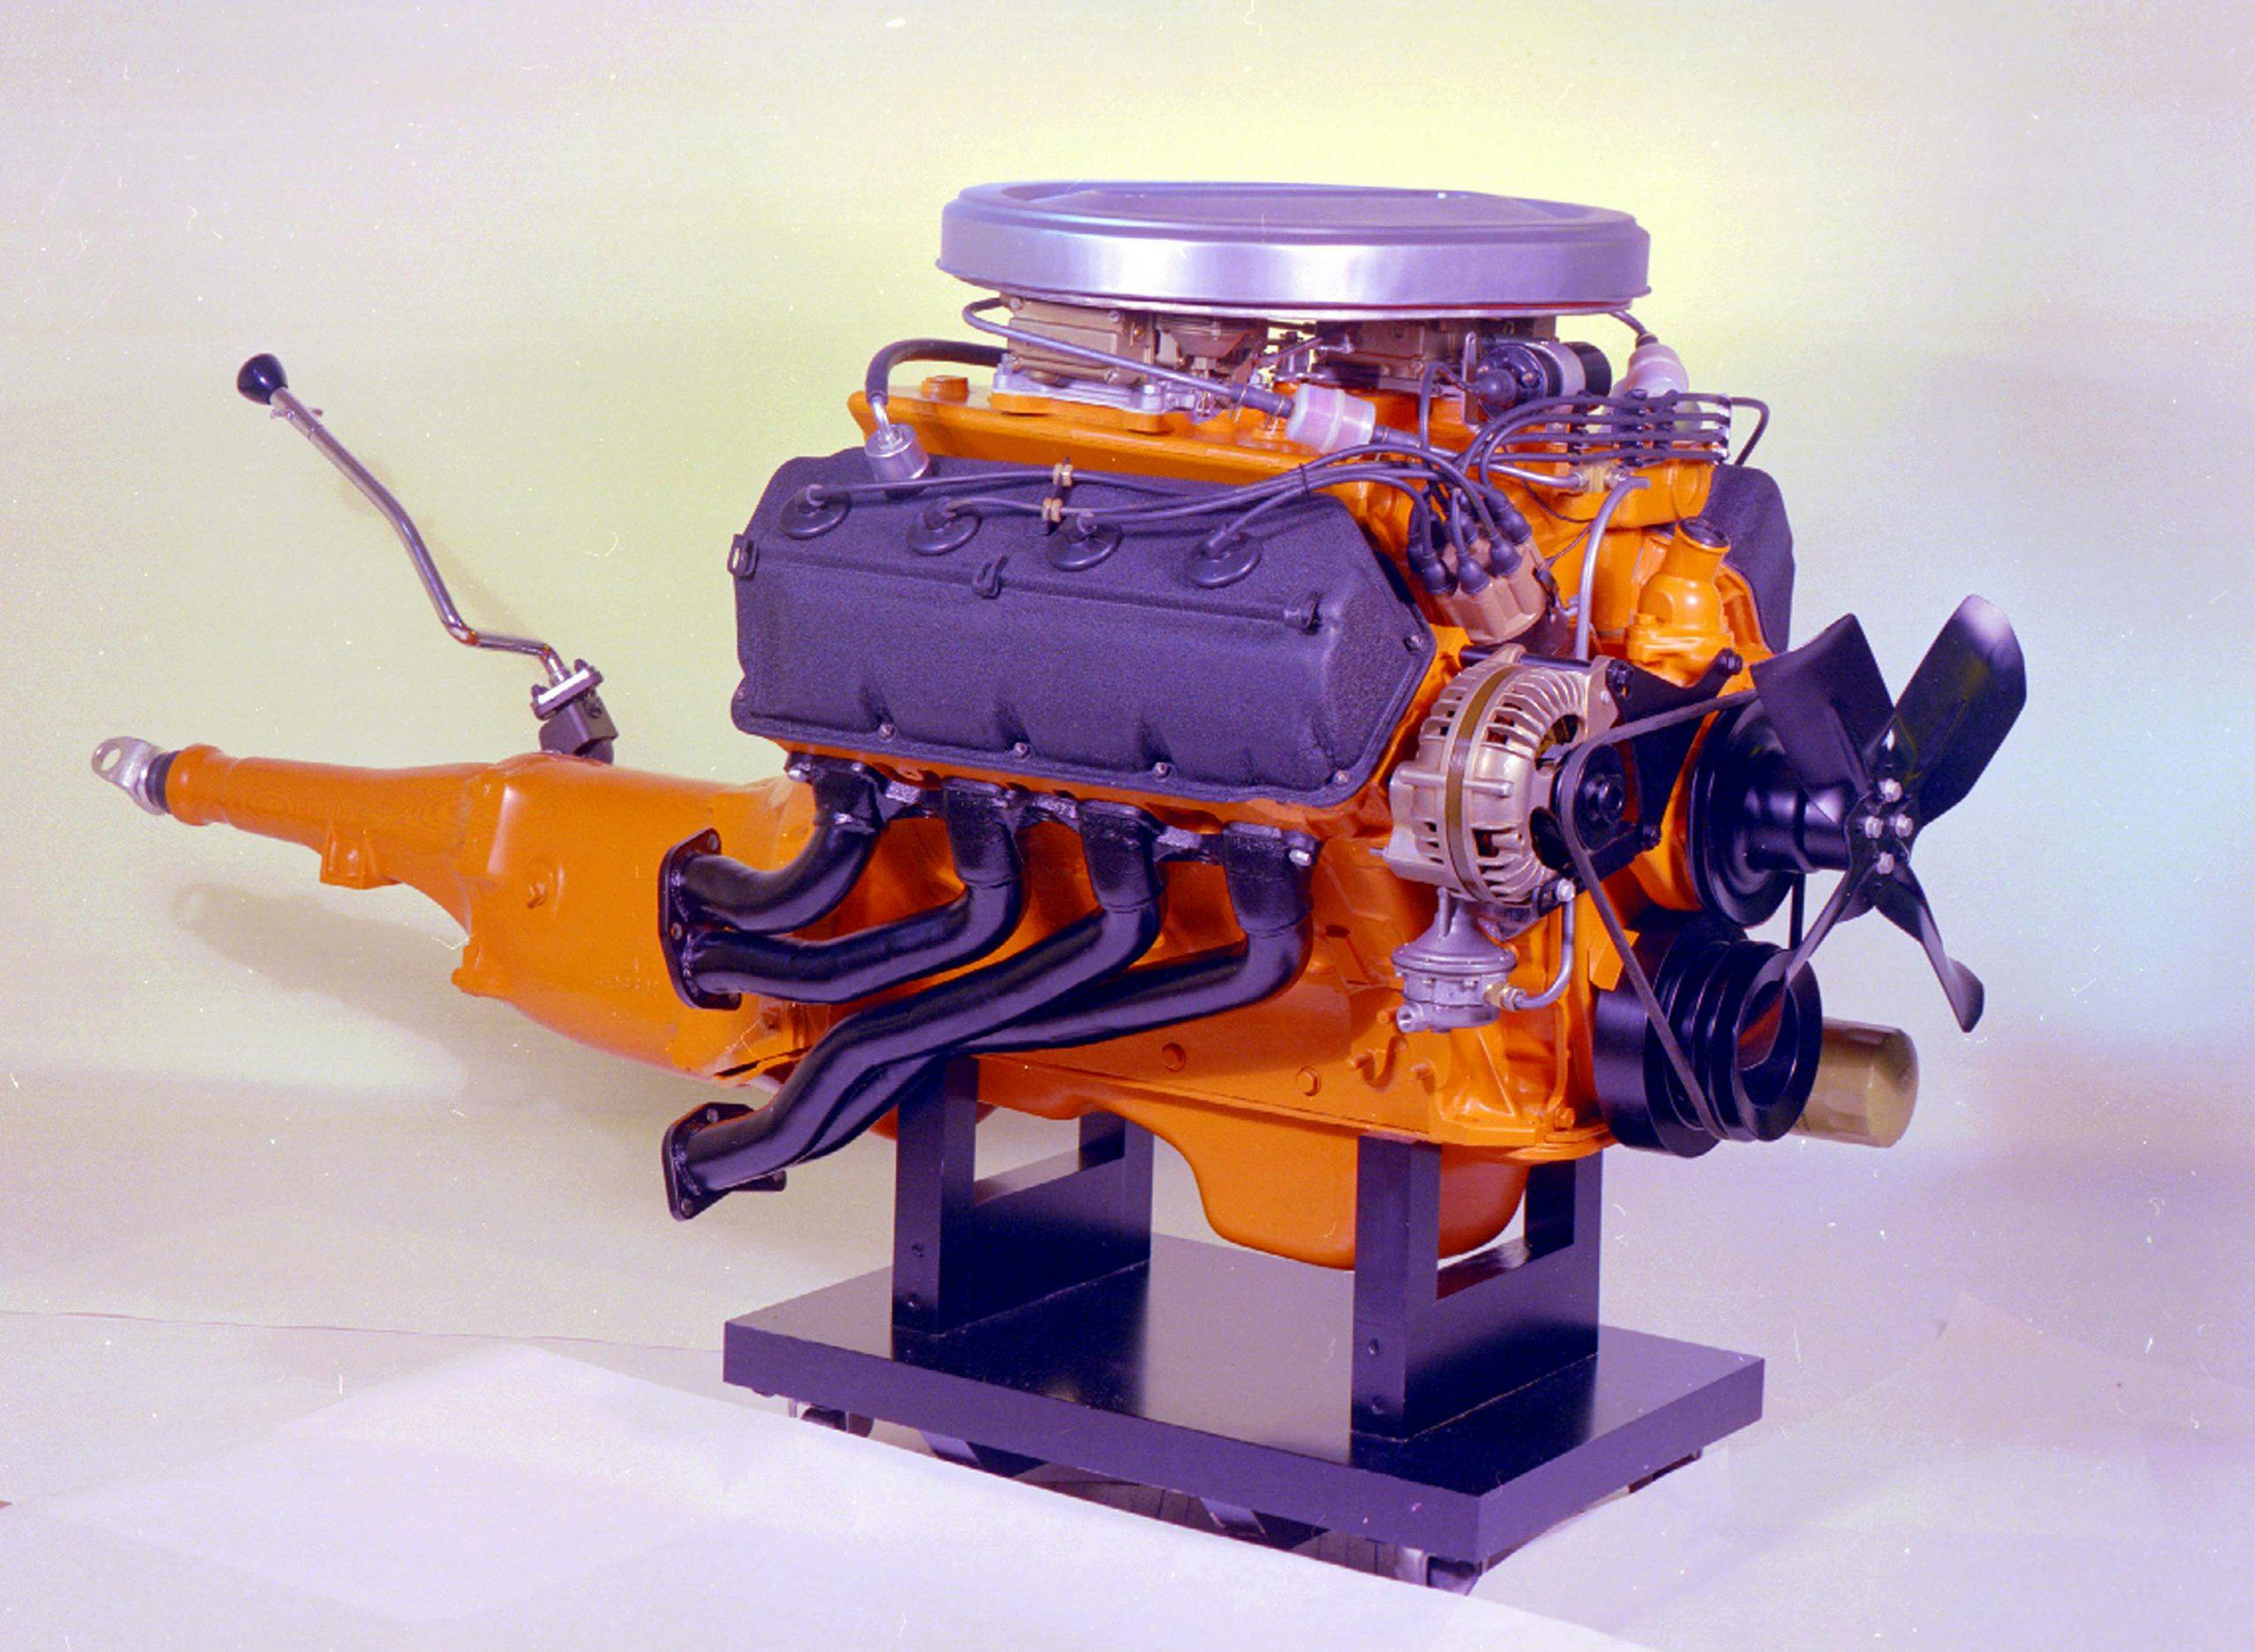 1964 Drag Hemi engine and transmission